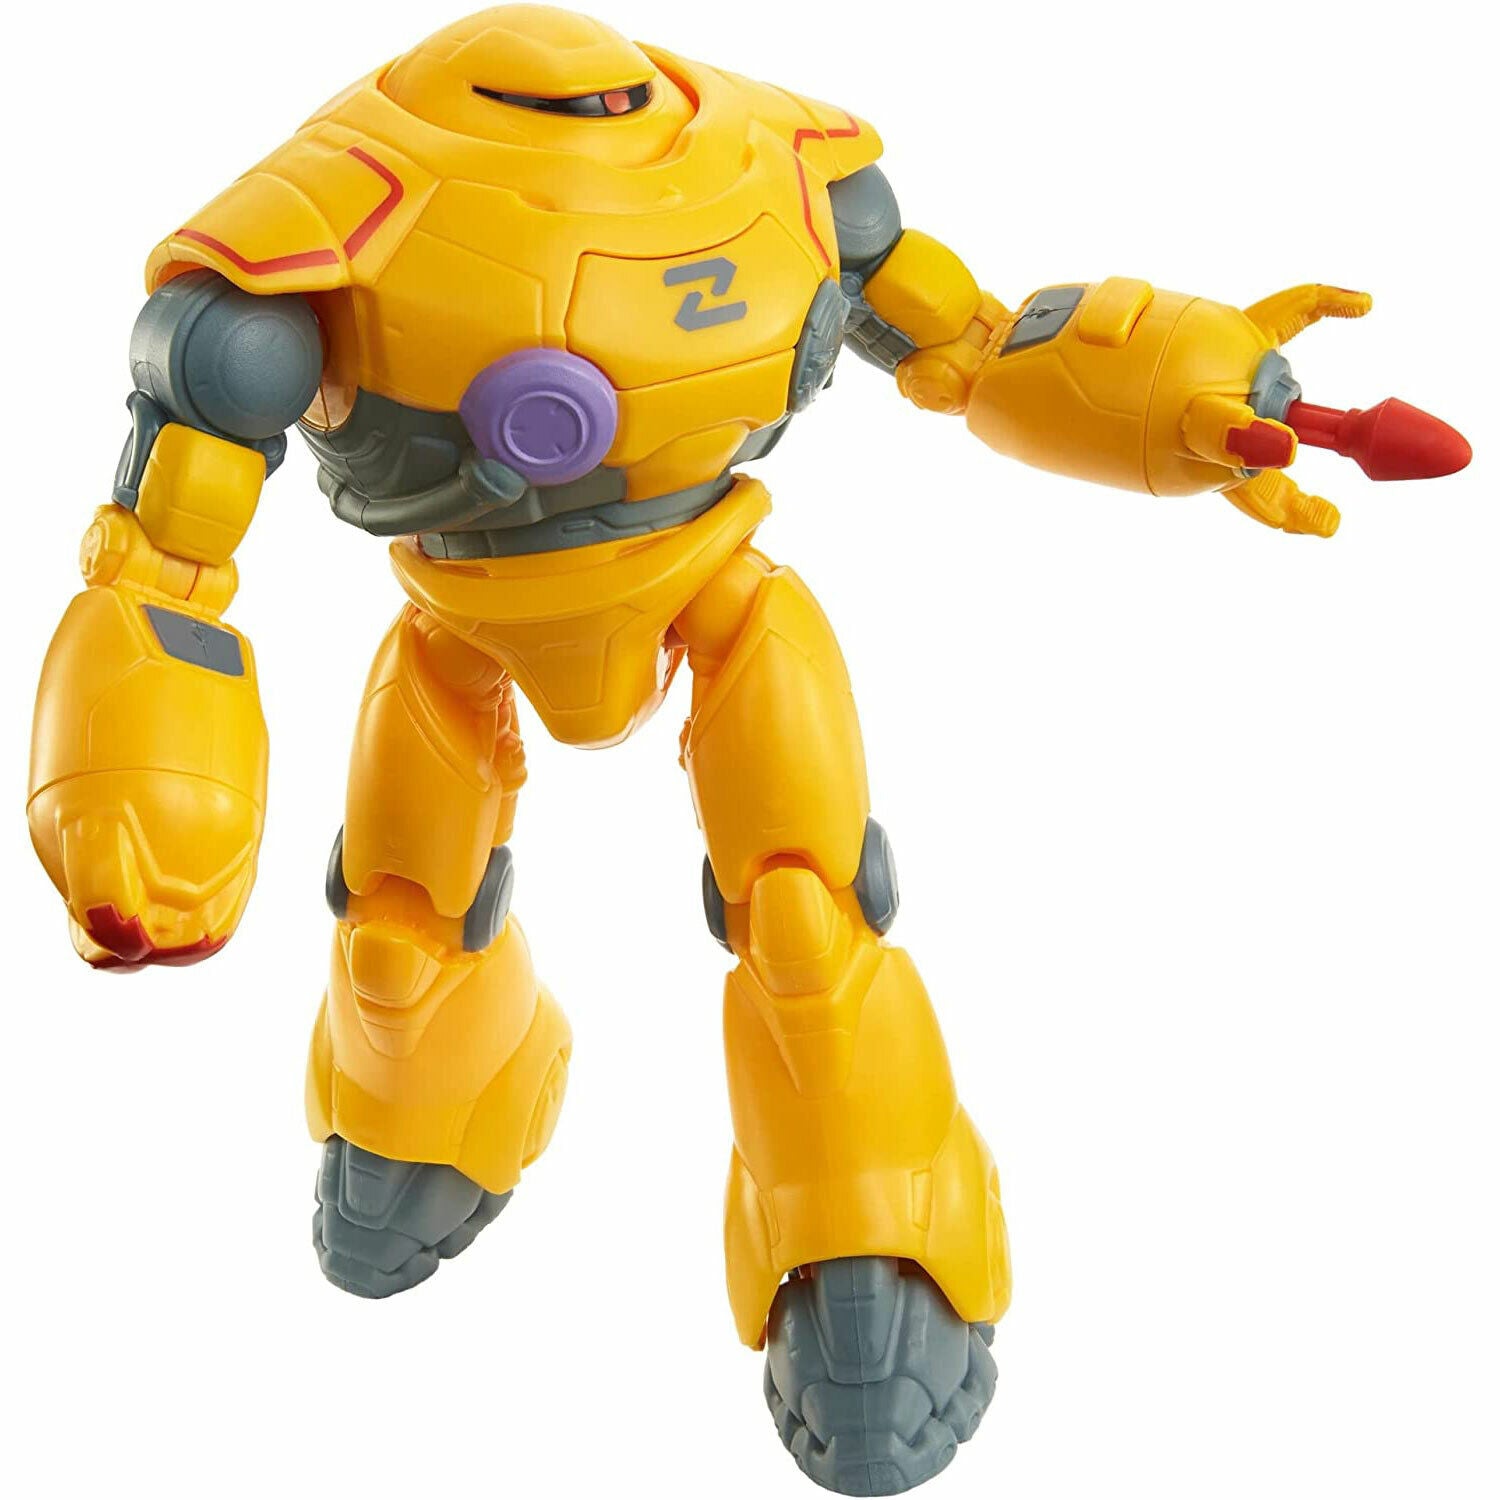 Disney Pixar Lightyear 8" Battle Equipped Zyclops Figure - New in Box